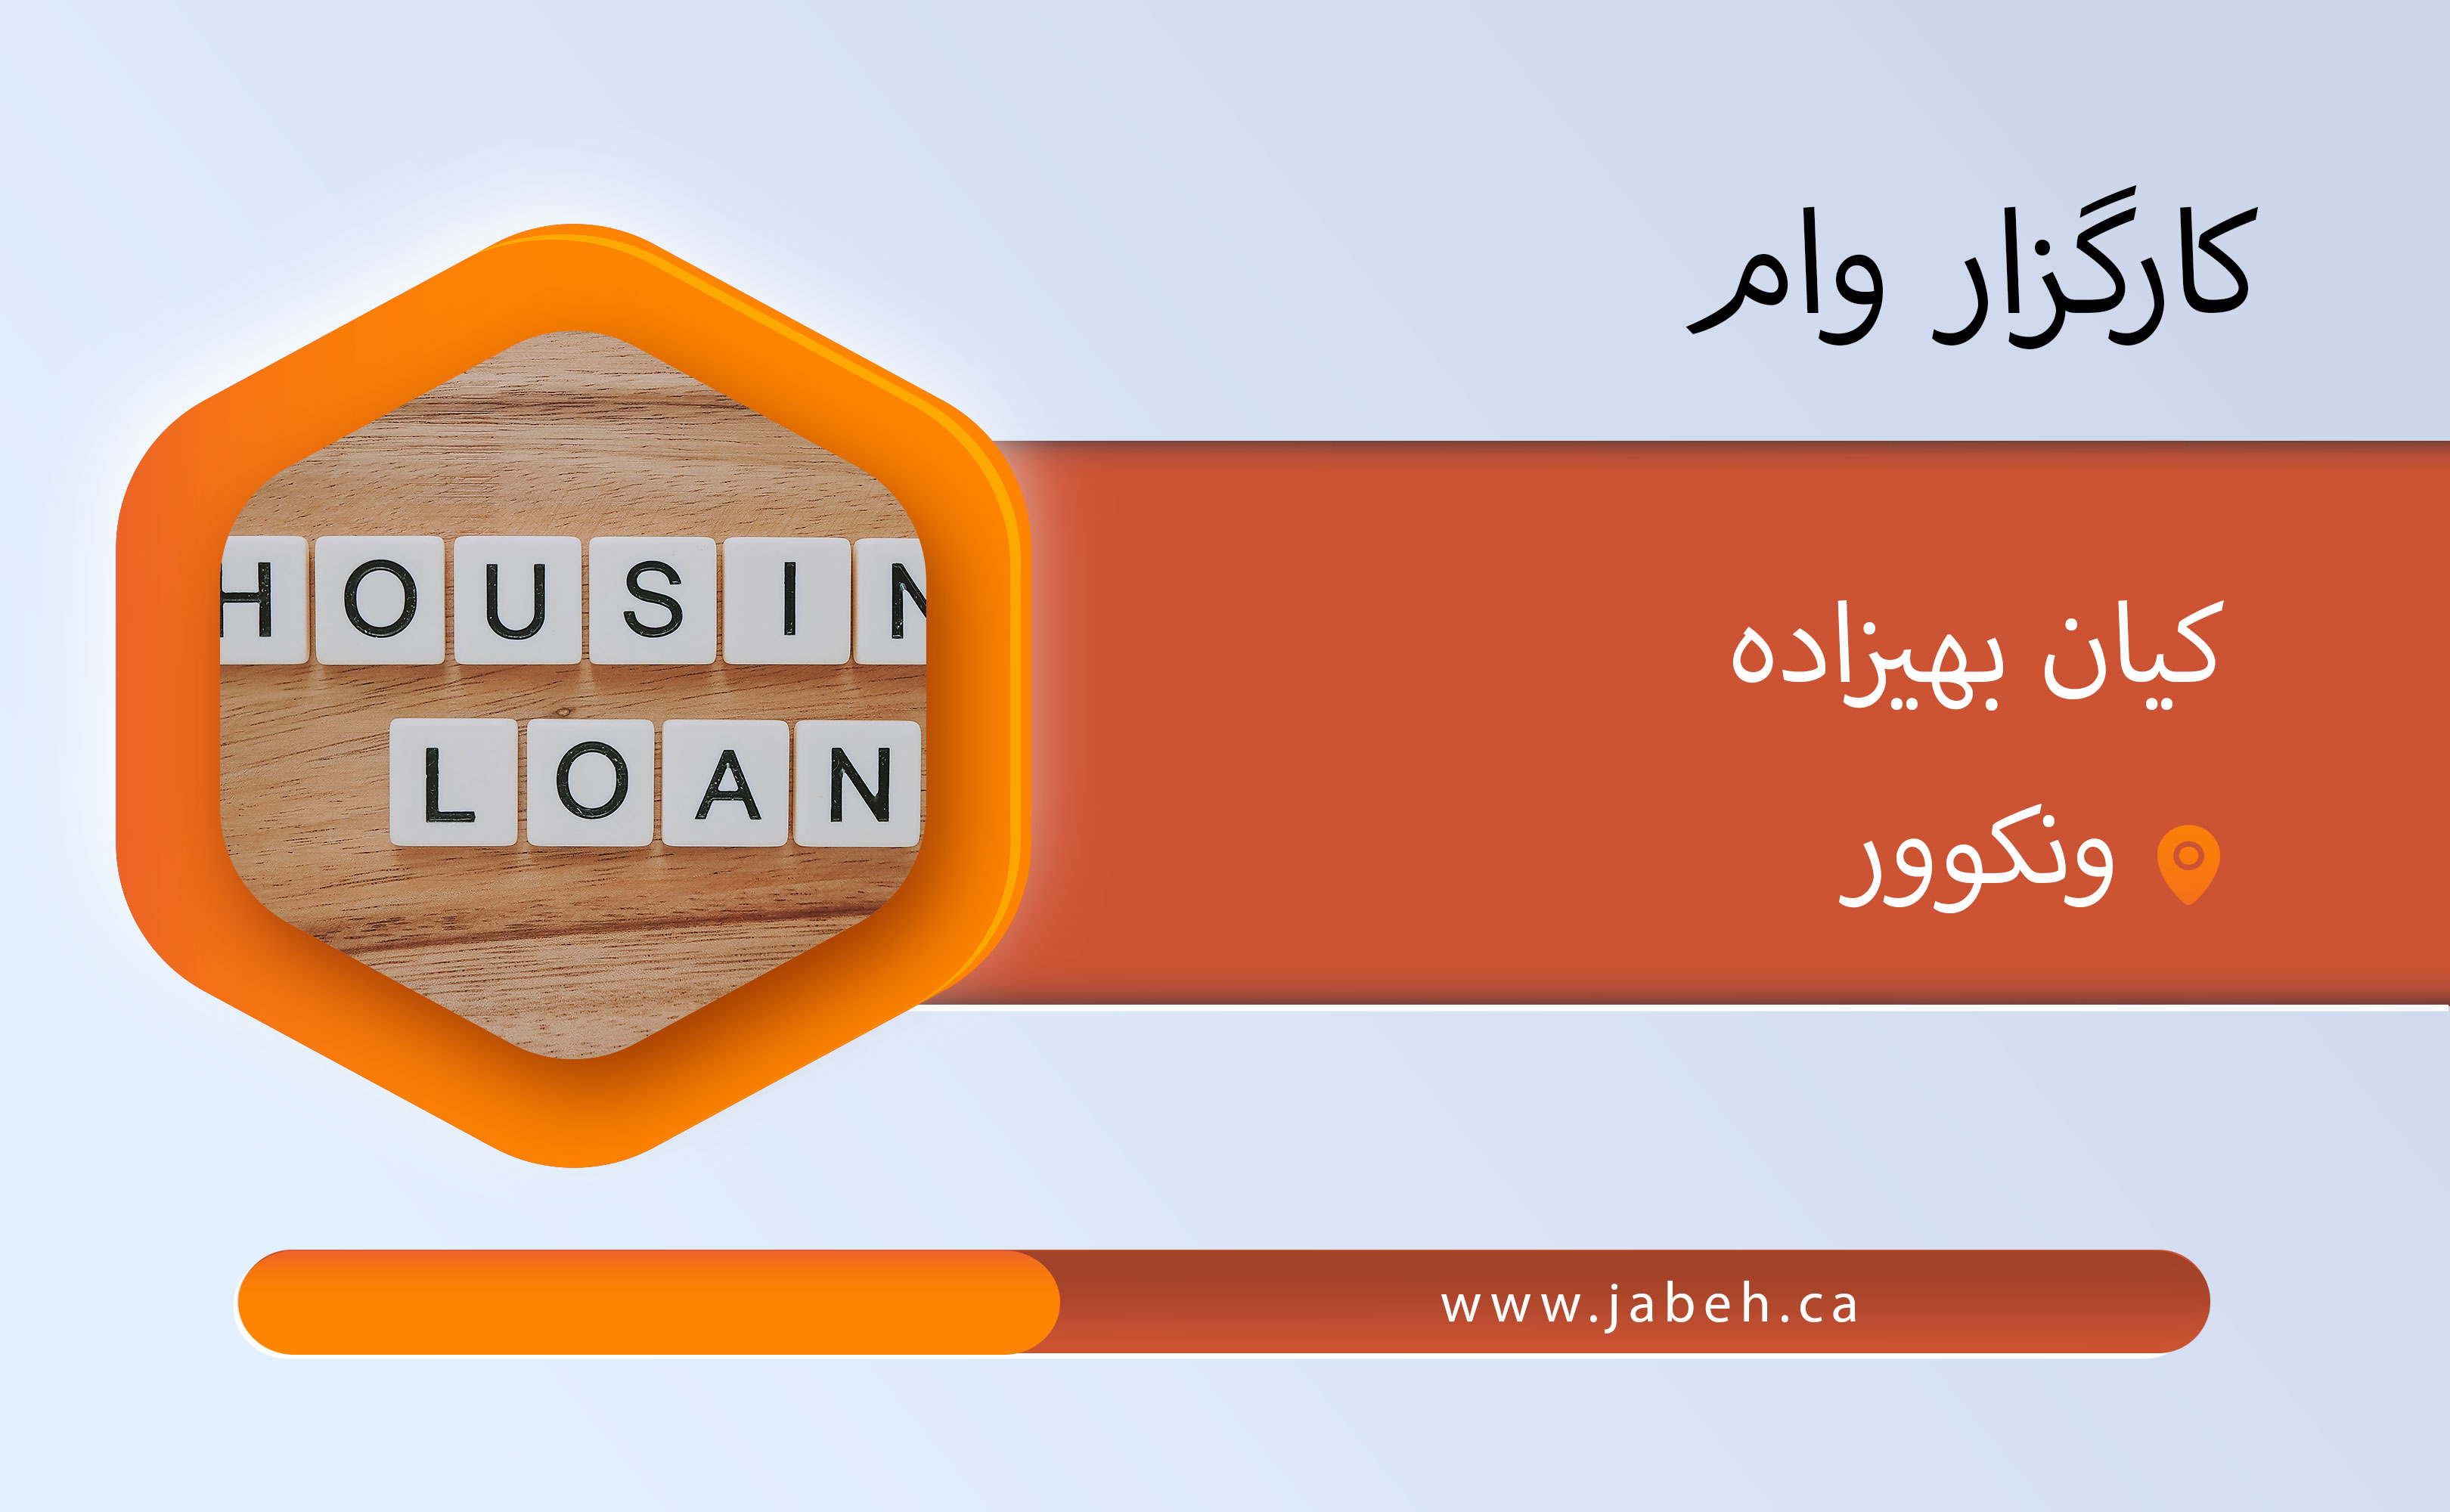 Iranian loan broker Kian Behizadeh in Vancouver